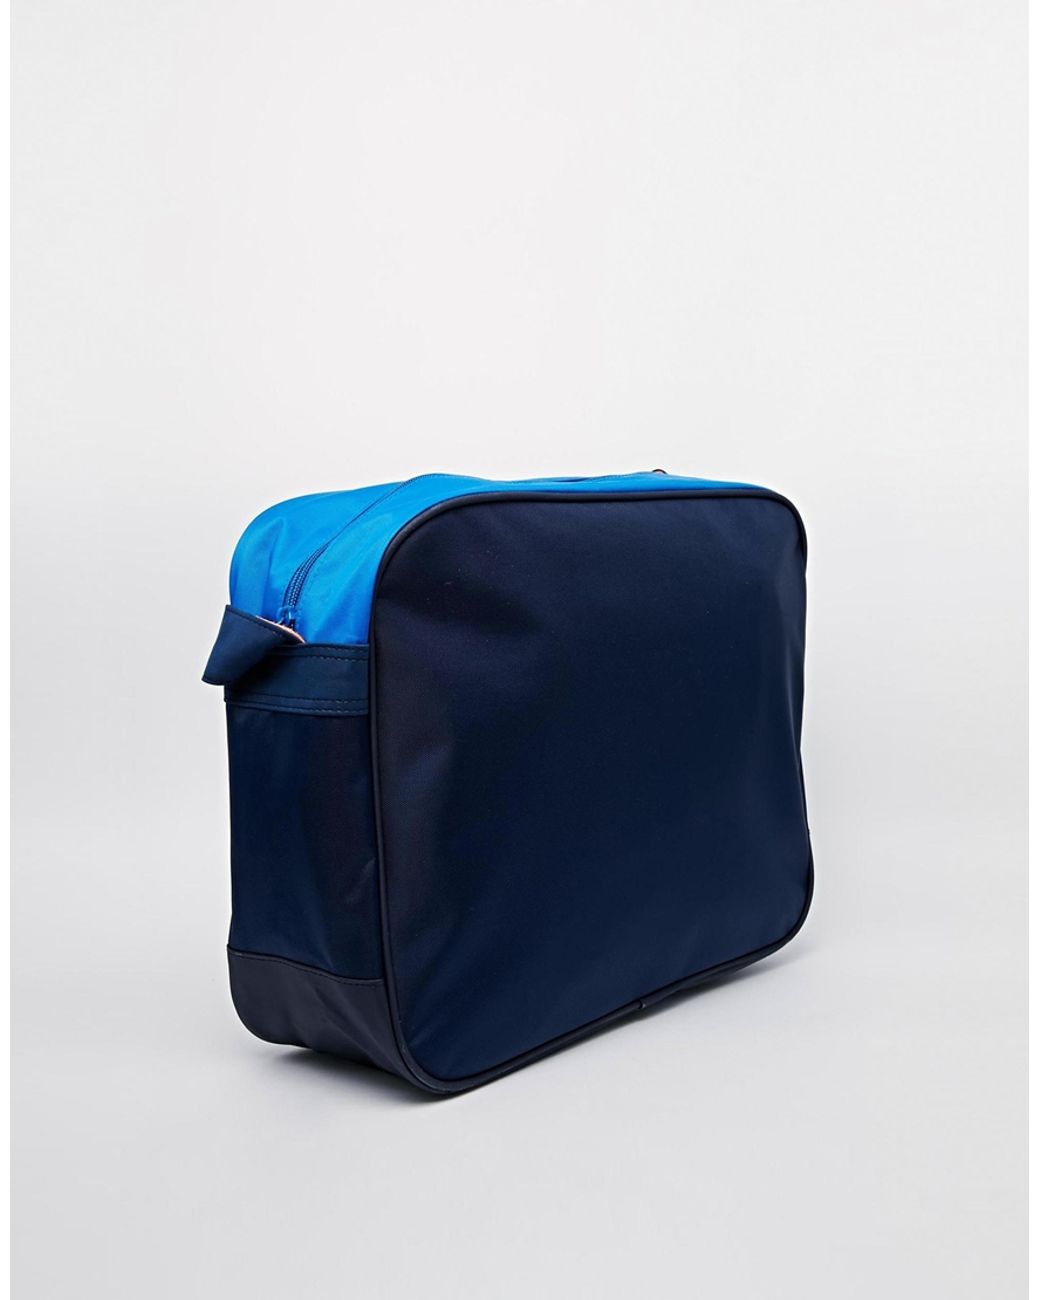 adidas Originals Adidas Zx Messenger Bag in Blue for Men | Lyst